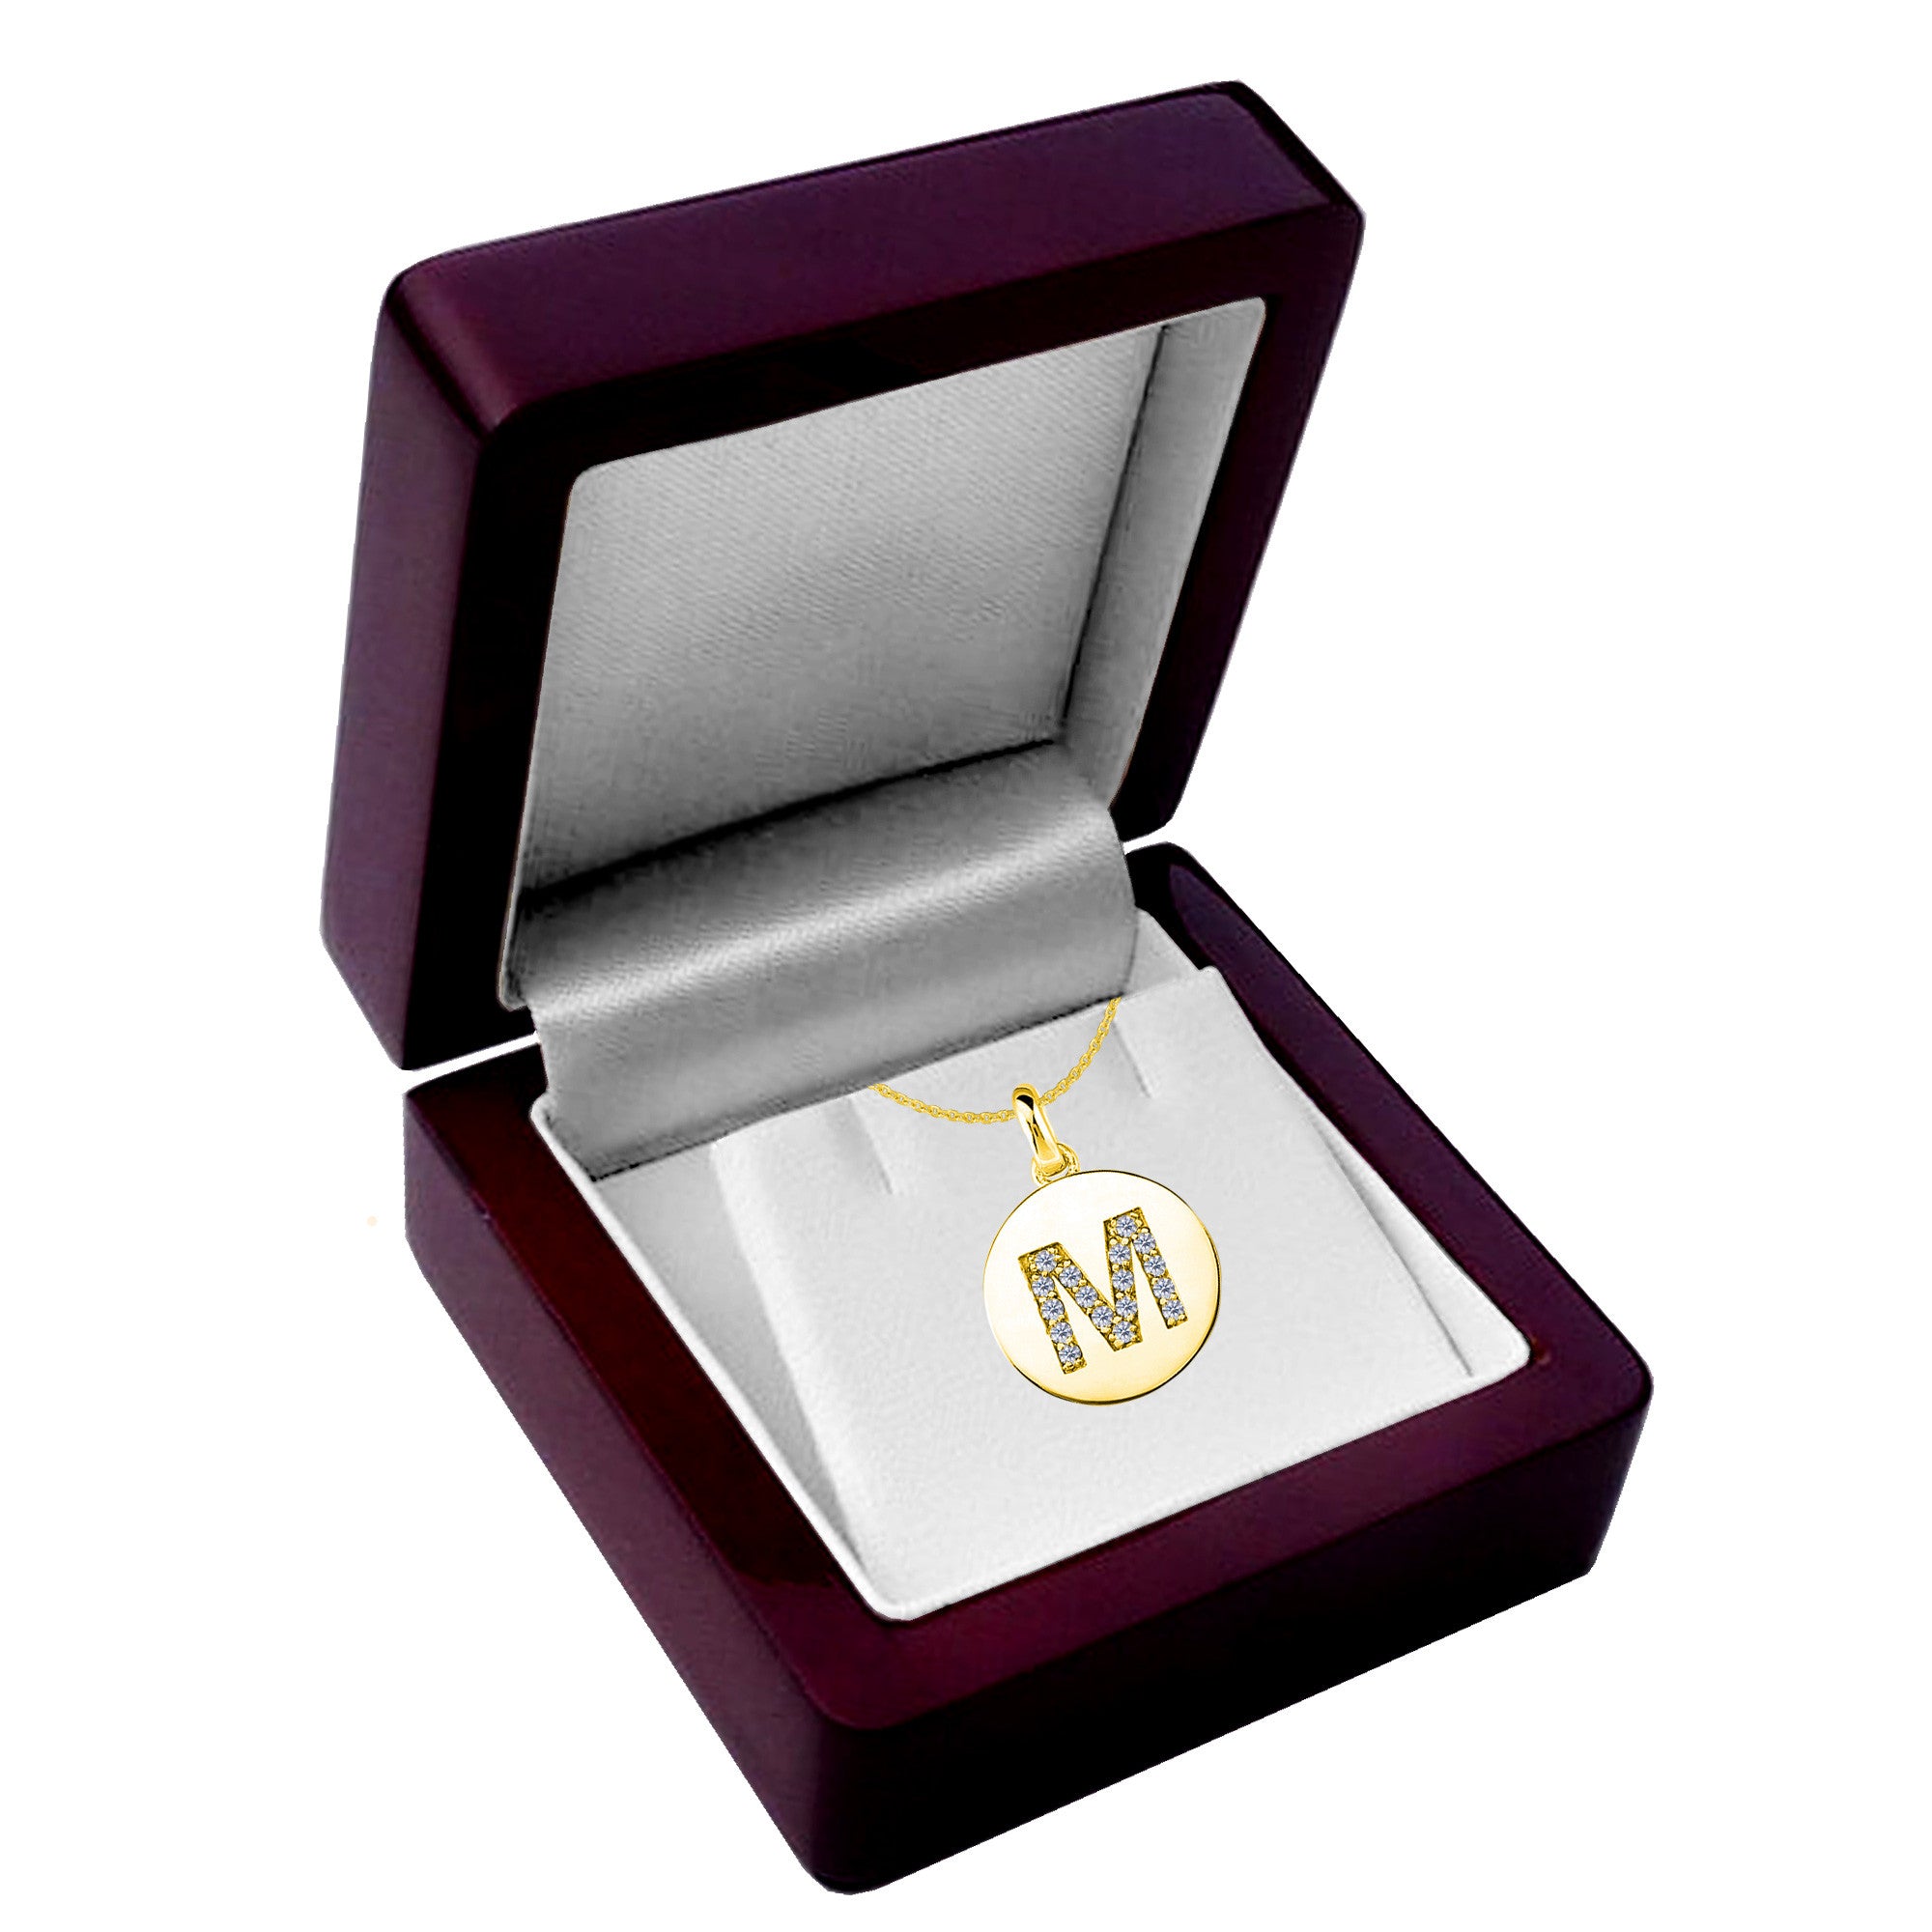 "M" Diamond Initial 14K Yellow Gold Disk Pendant (0.17ct) fine designer jewelry for men and women